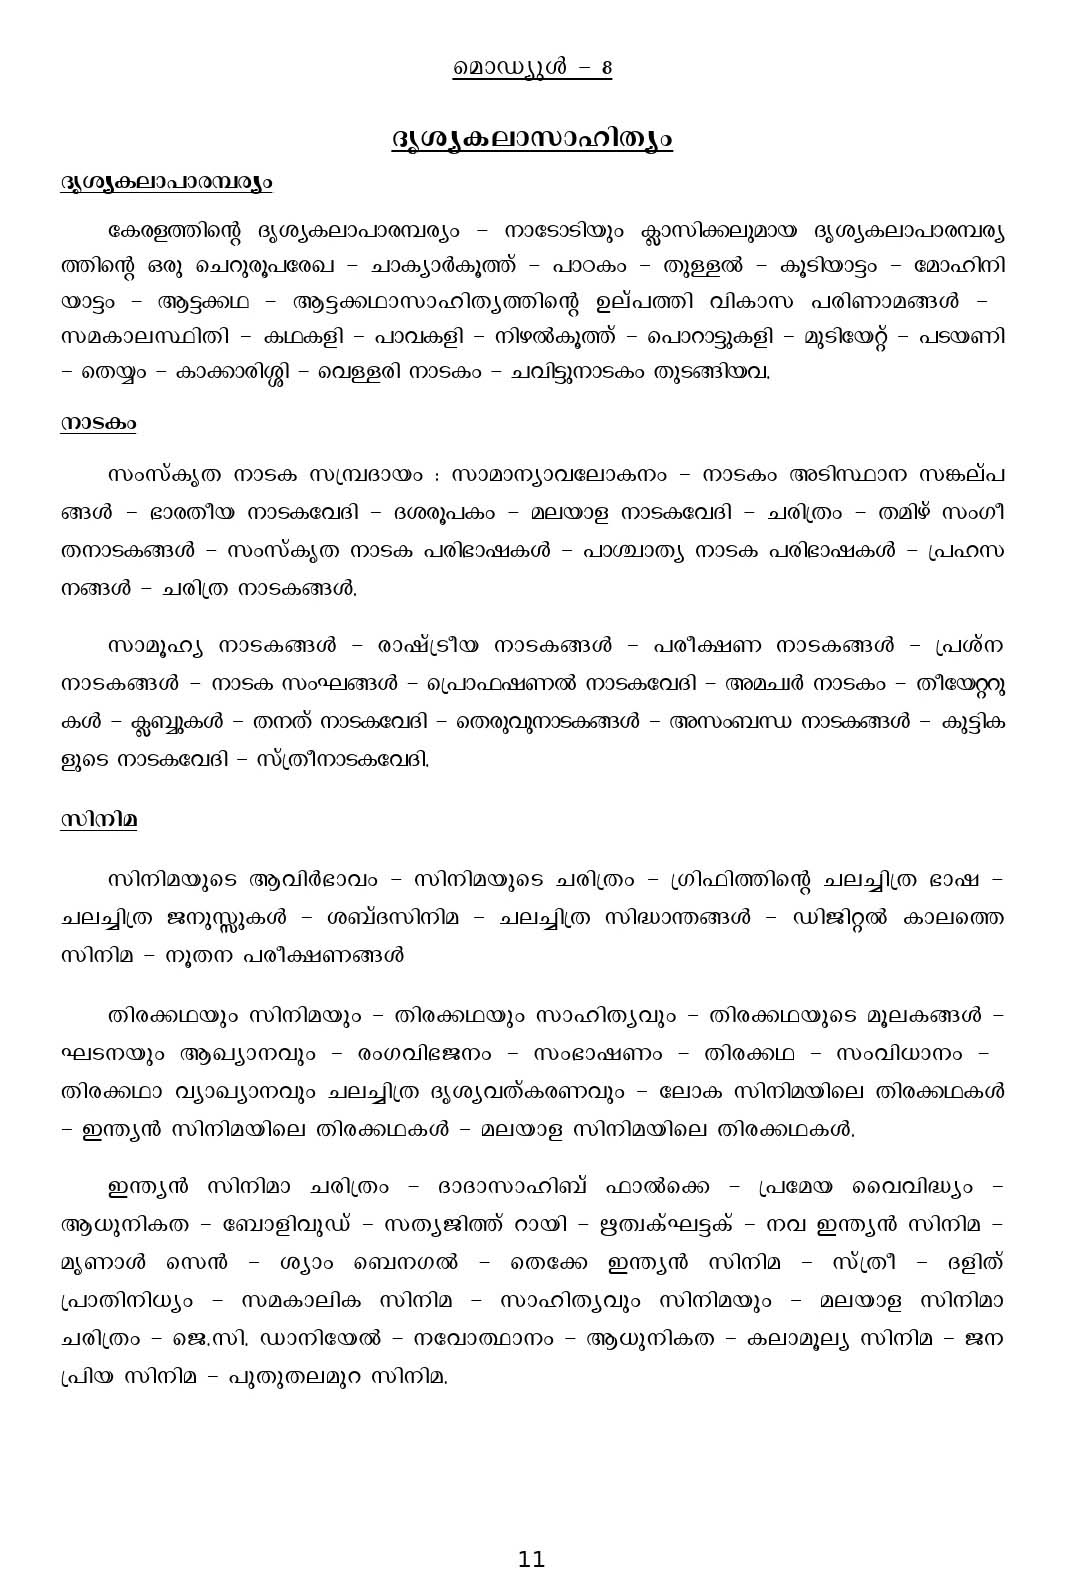 Kerala PSC Assistant Professor Malayalam Exam Syllabus - Notification Image 11